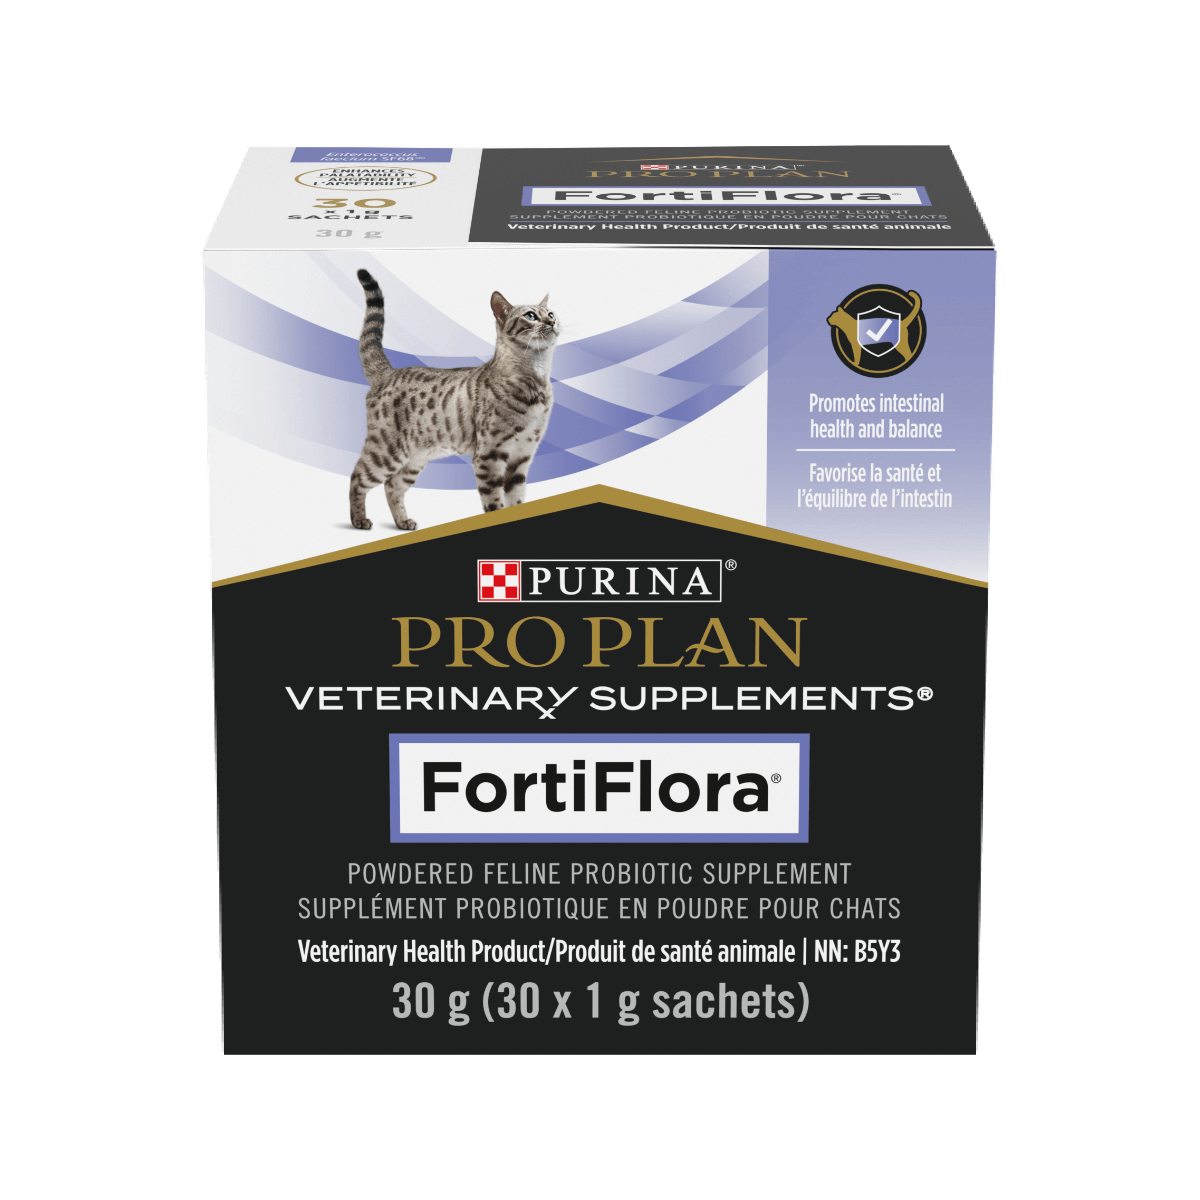 Purina Fortiflora Feline (30 - 1g packets)